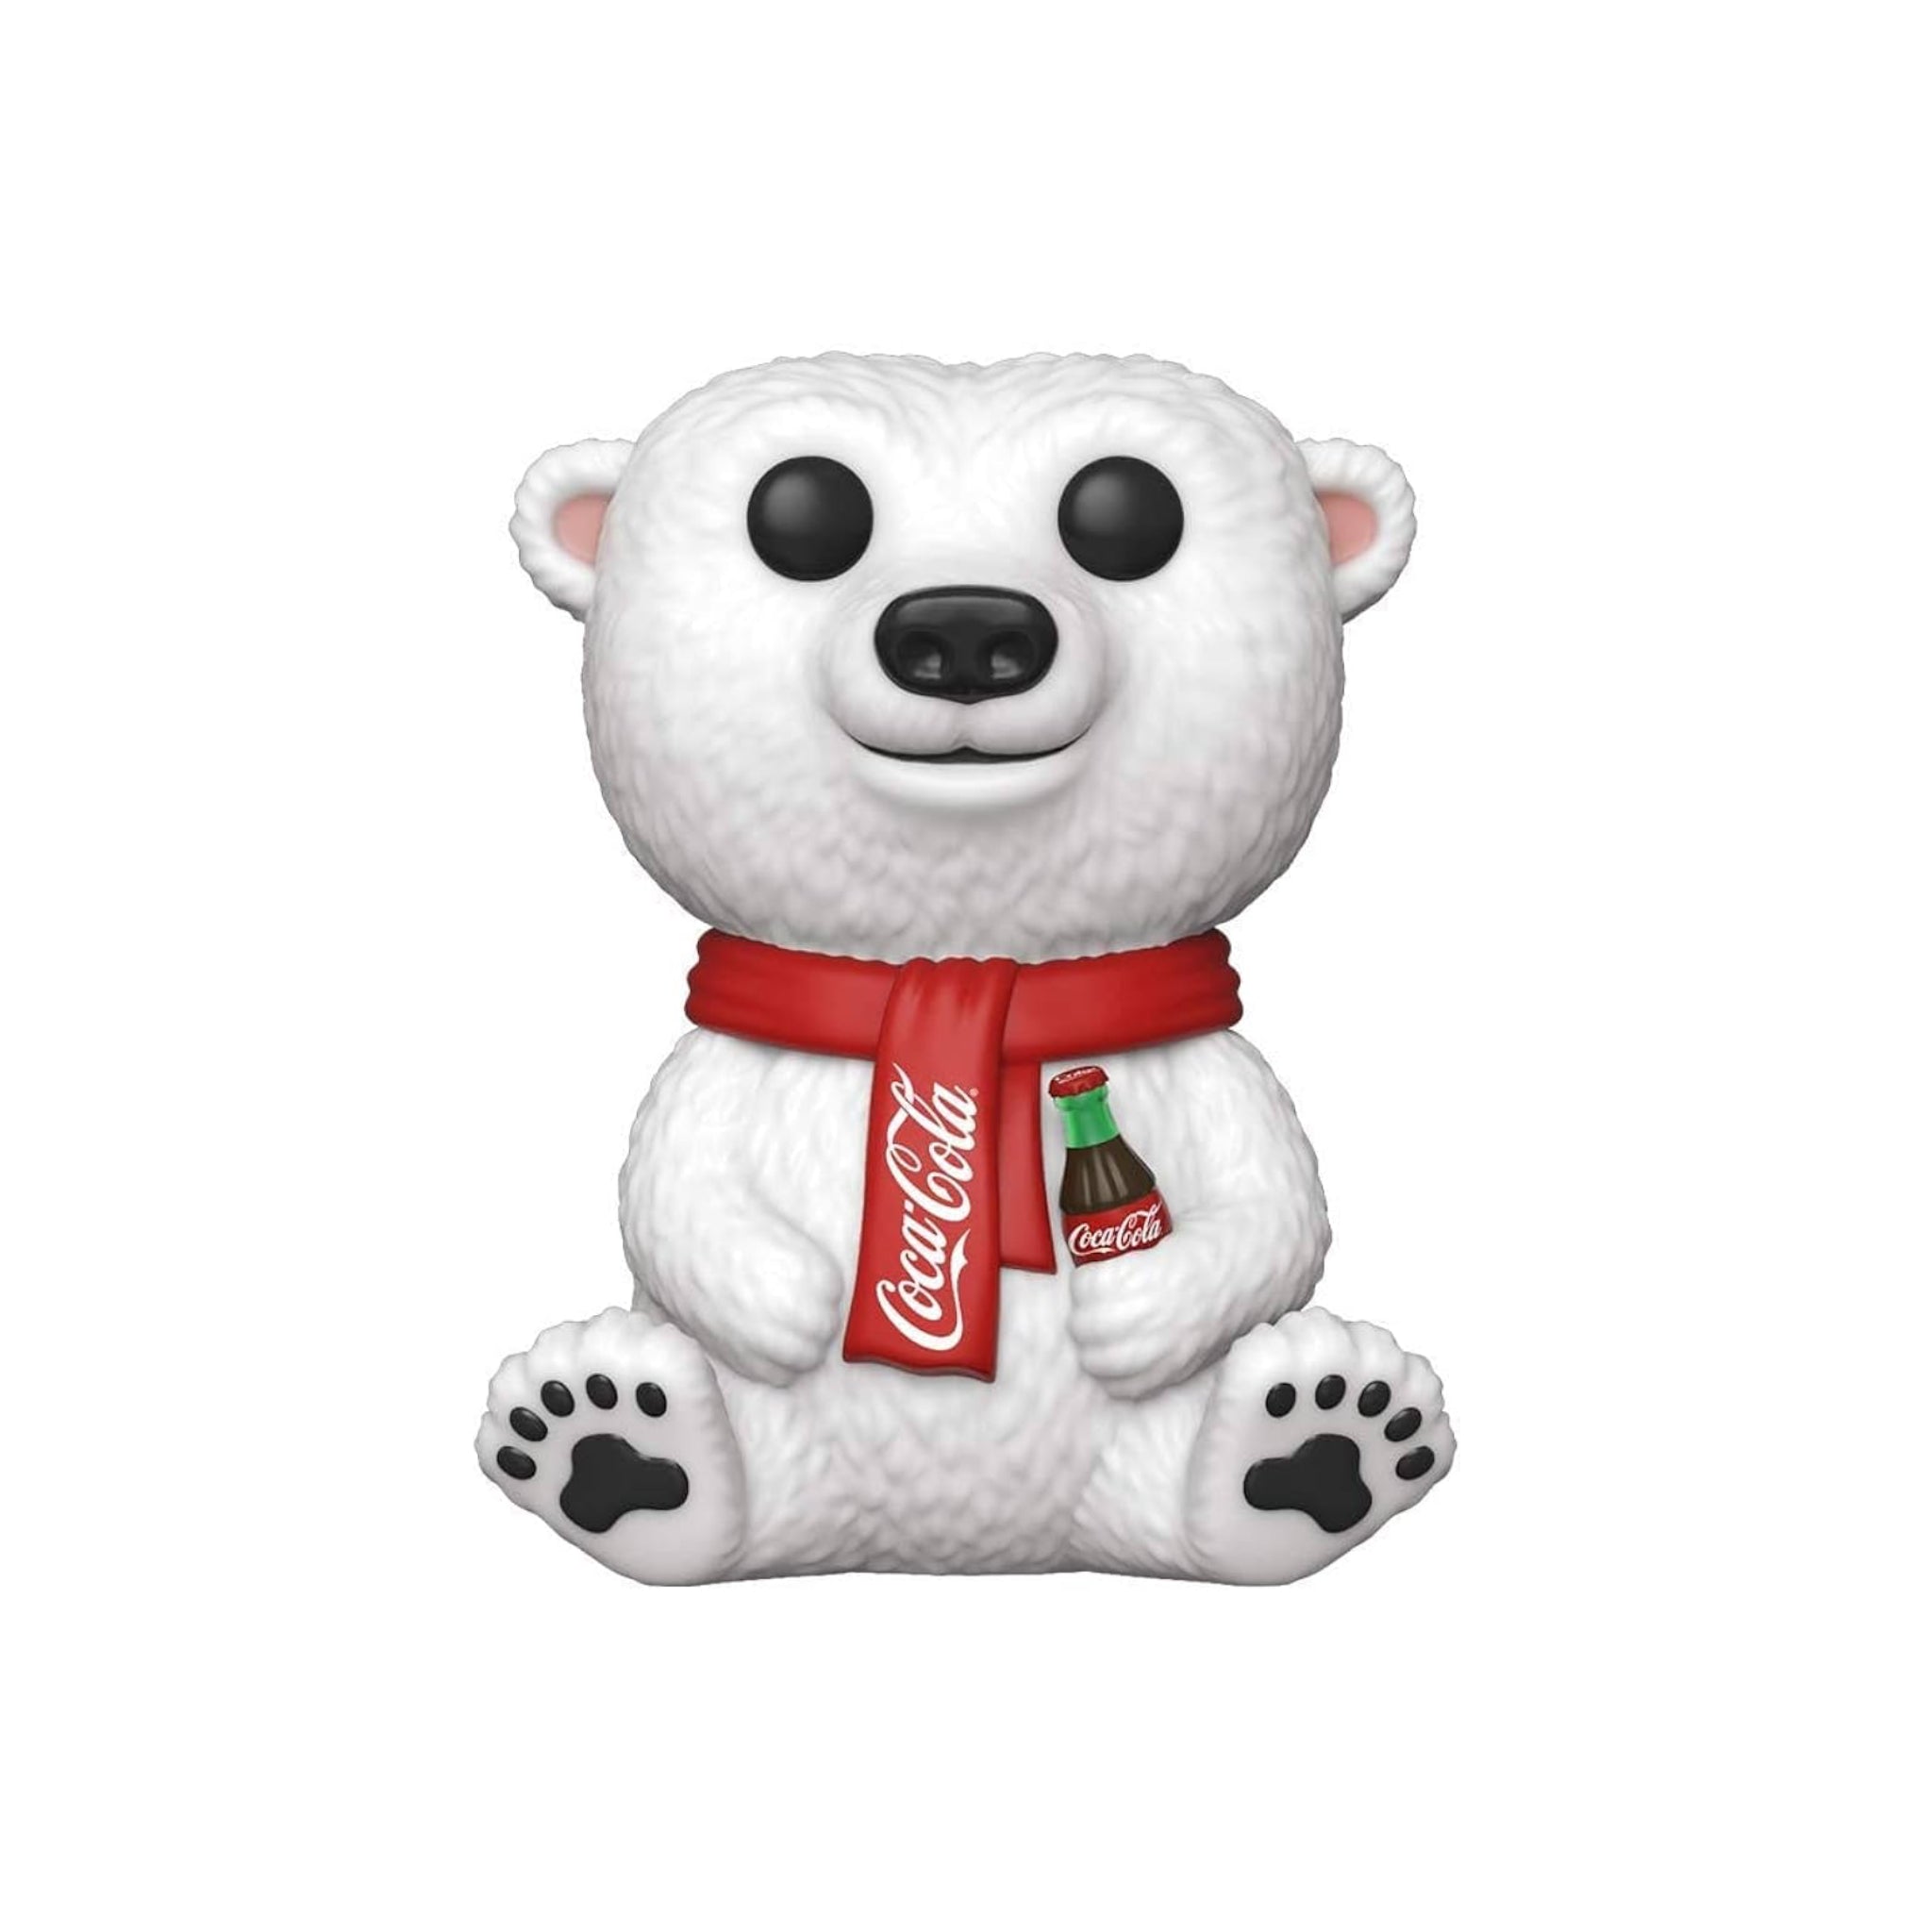 Coca-Cola Polar Bear Funko Pop!